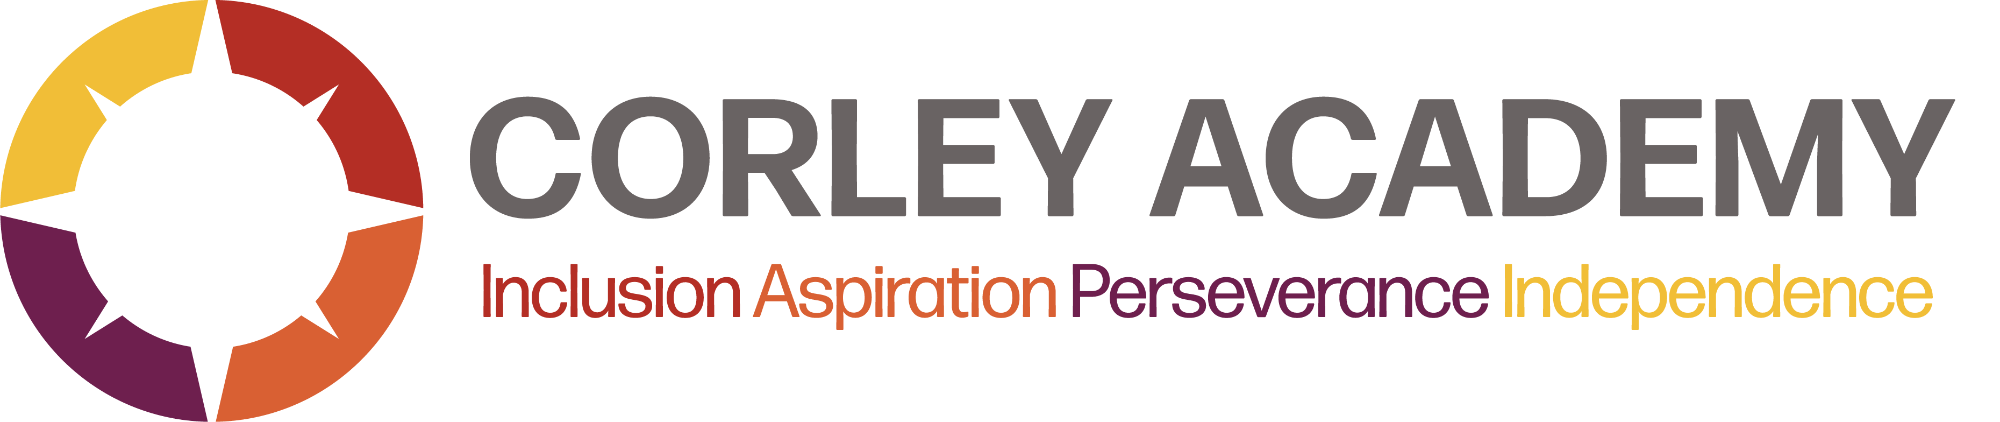 Corley Academy logo